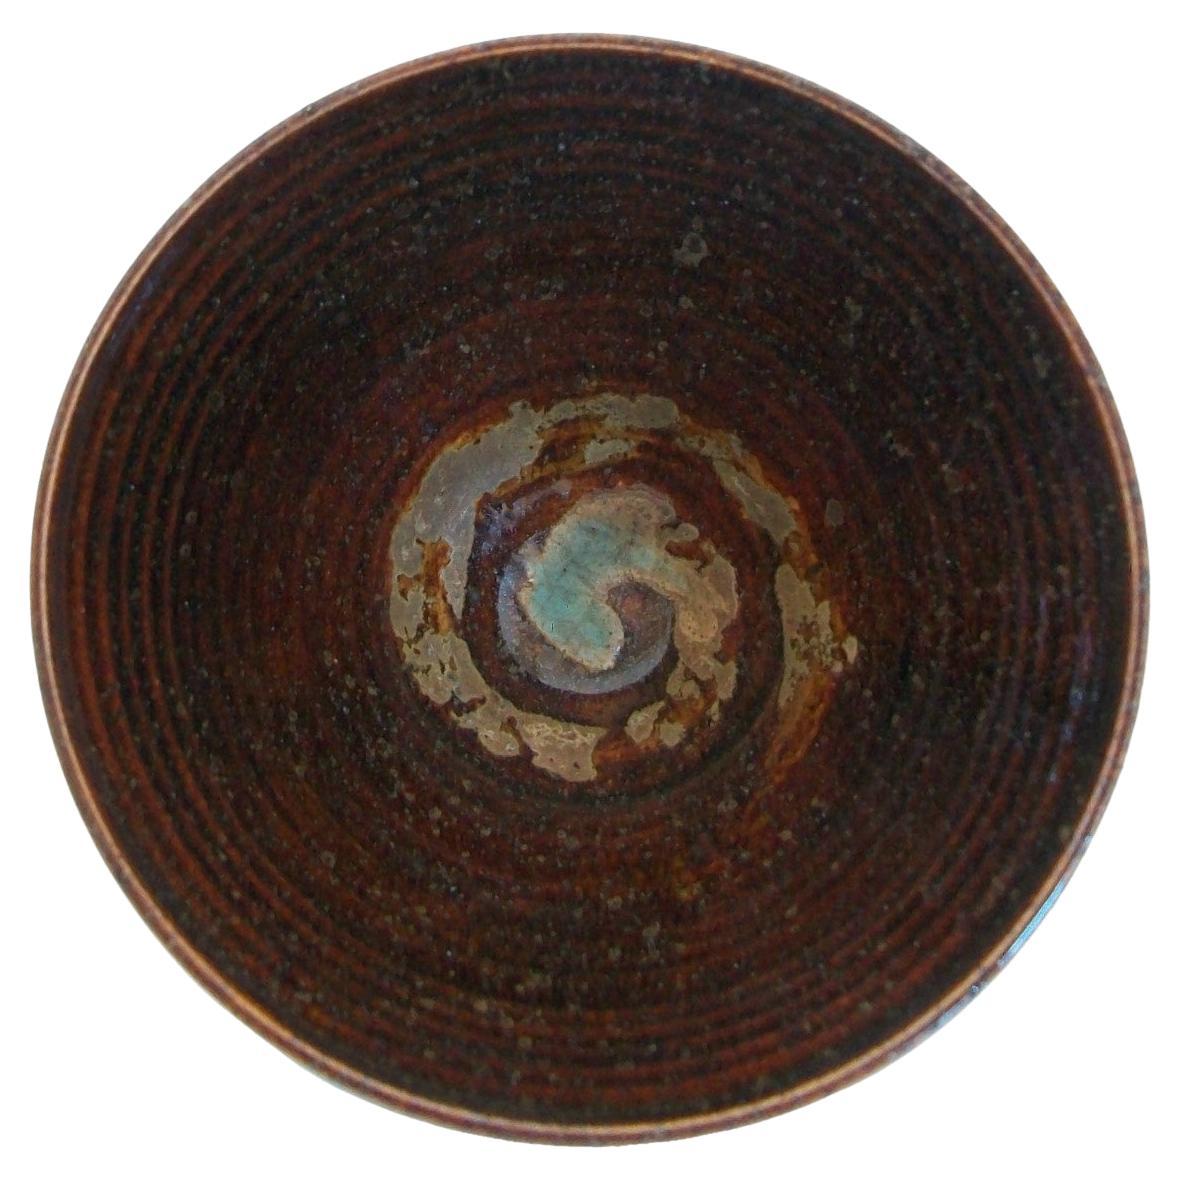 Bol conique de Studio Pottery, signé de façon indistincte, Canada, vers 2006